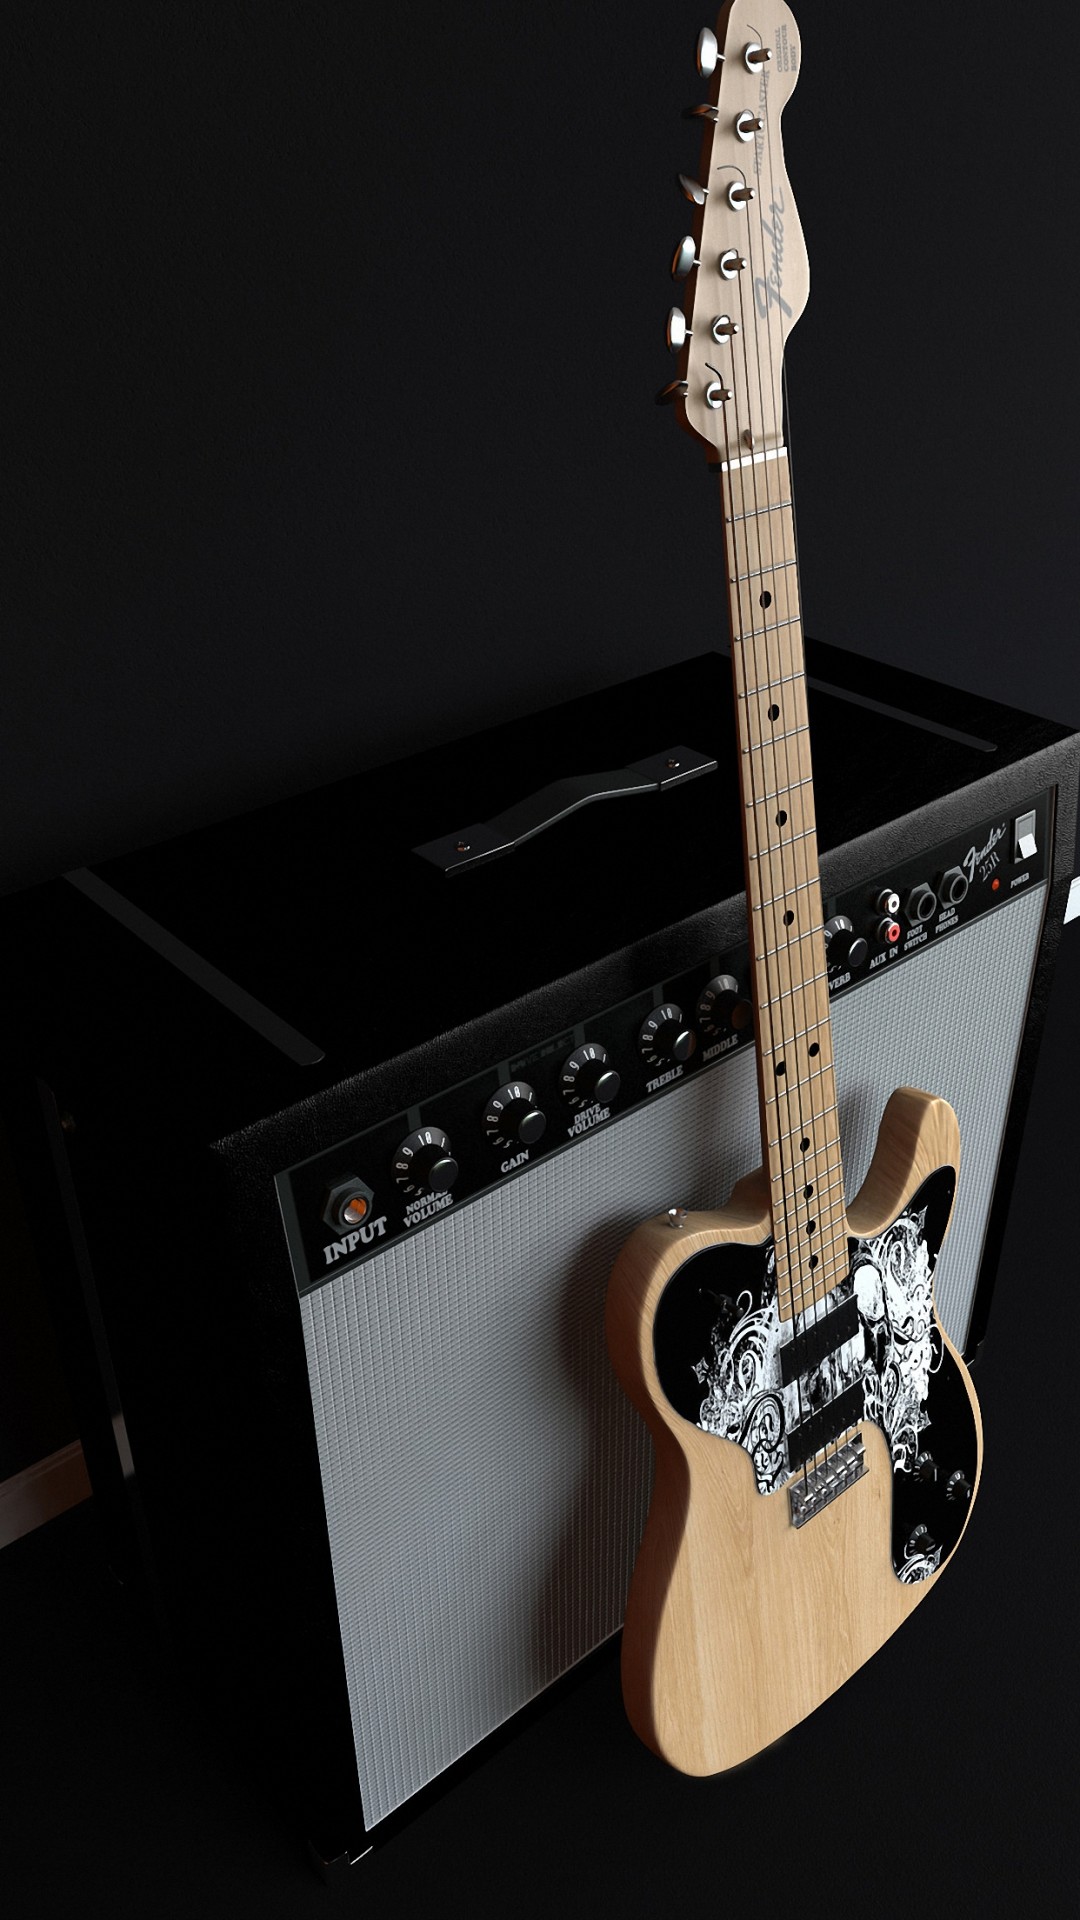 Fender Music Guitar Iphone 6s Wallpapers Hd Data Src Bass Guitar Iphone 6 1080x19 Wallpaper Teahub Io